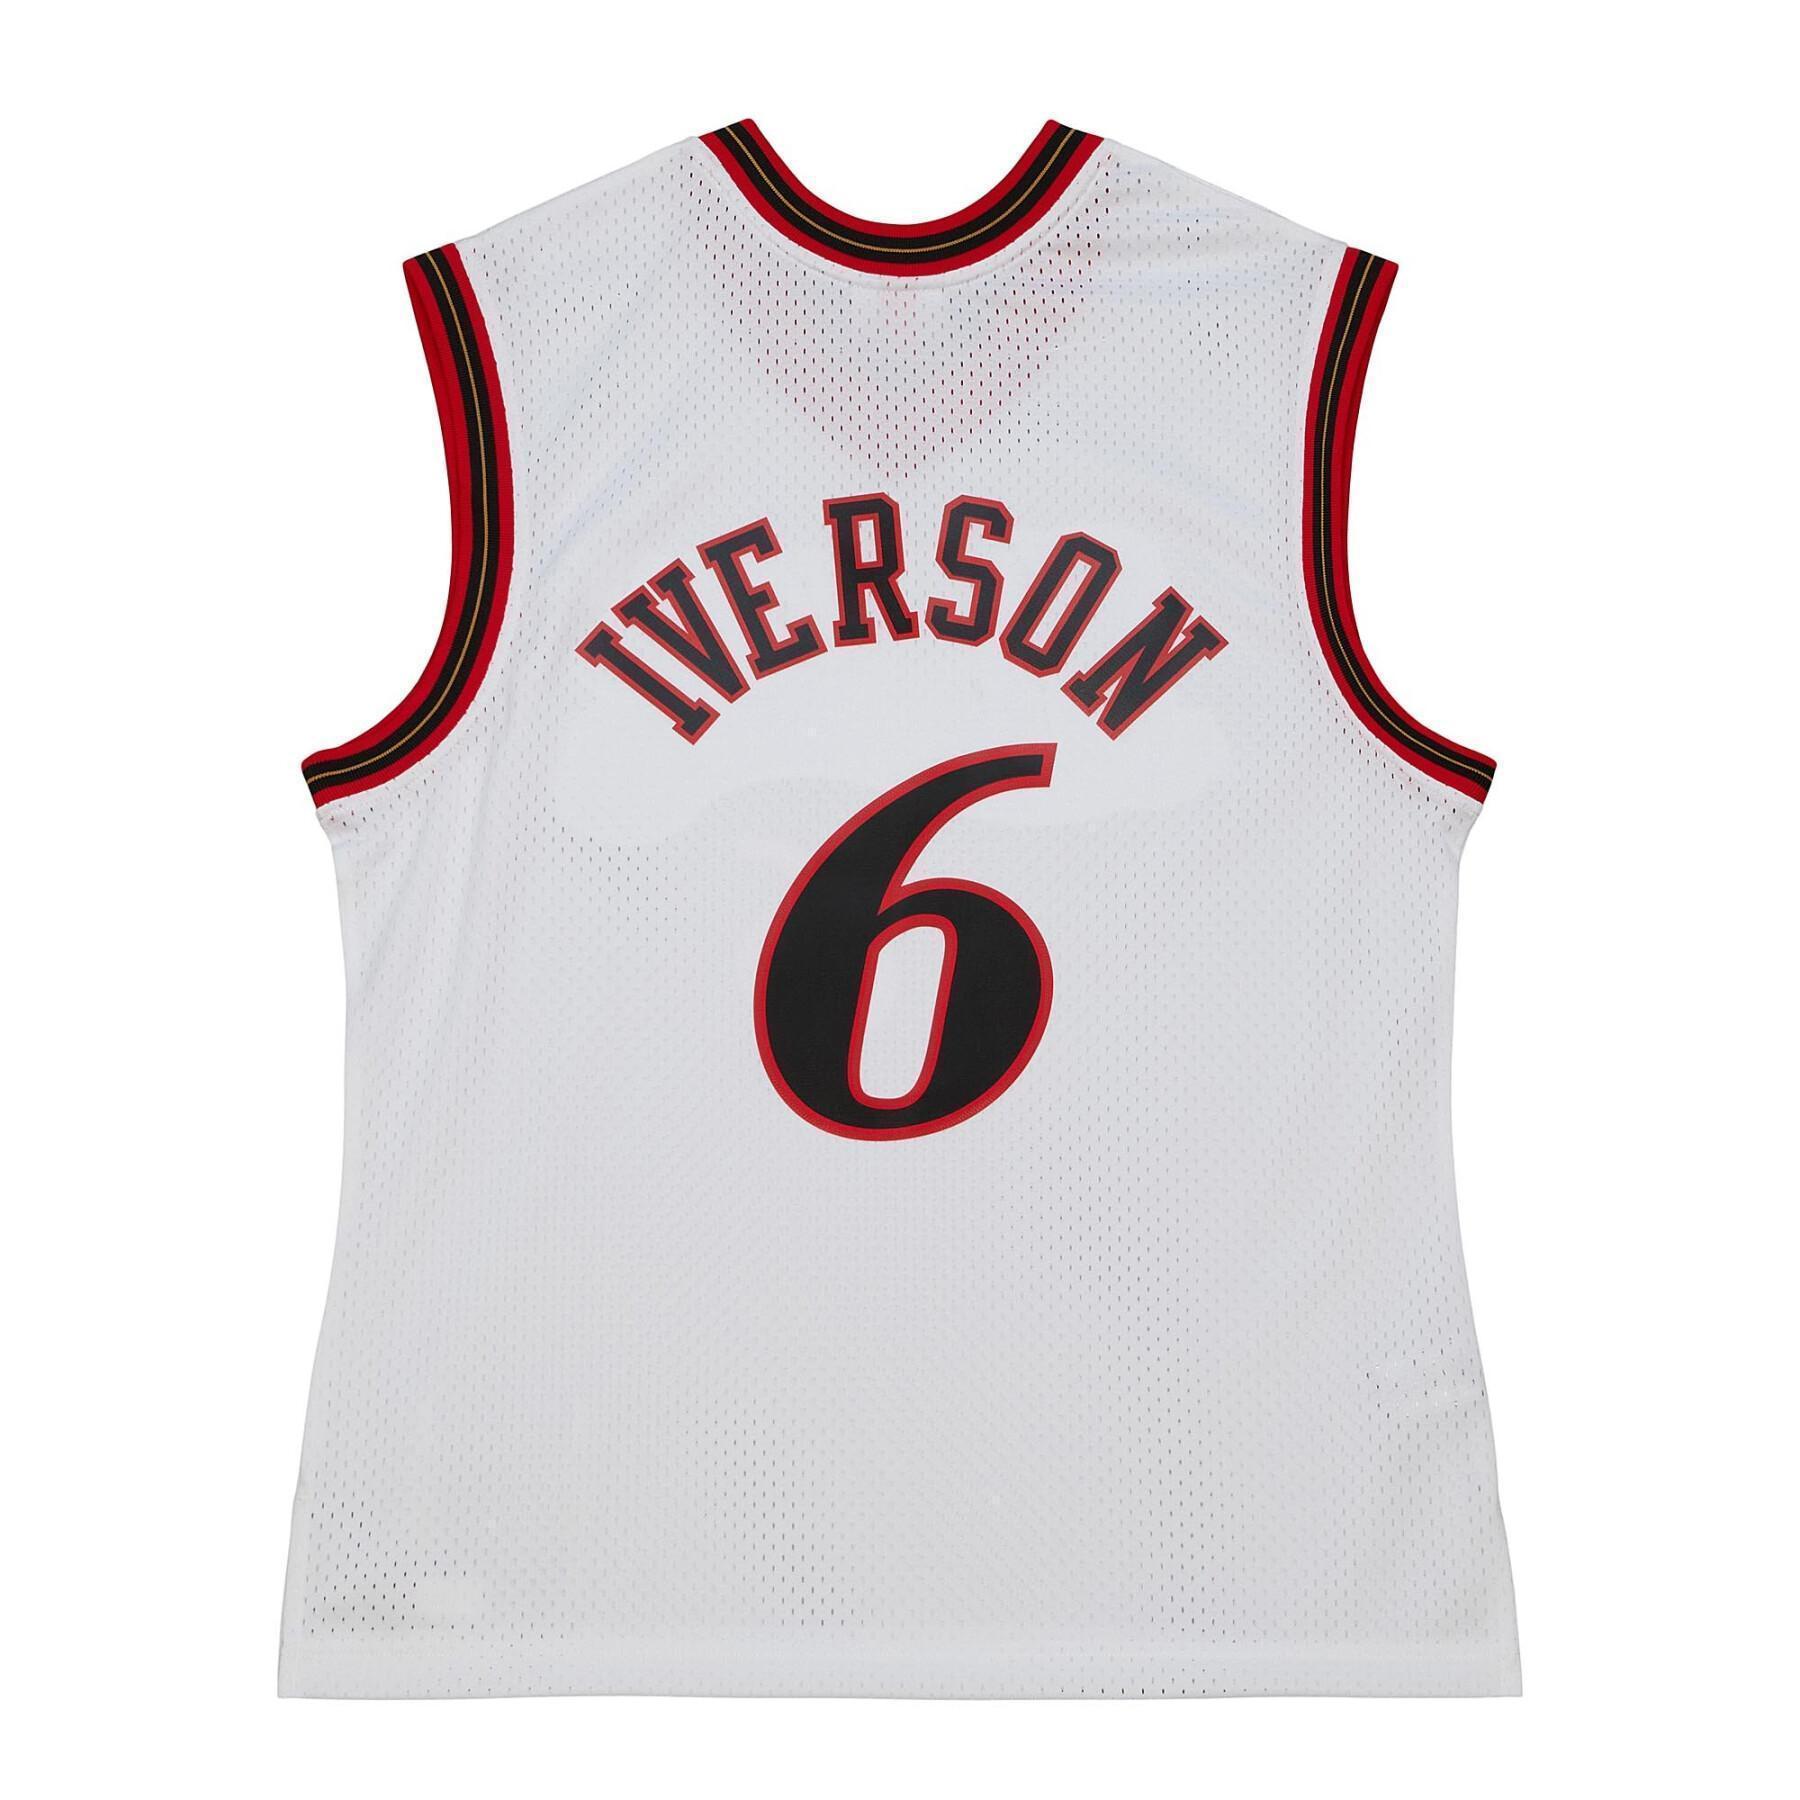 Camiseta sin mangas Philadelphia 76ers 2002 Allen Iverson